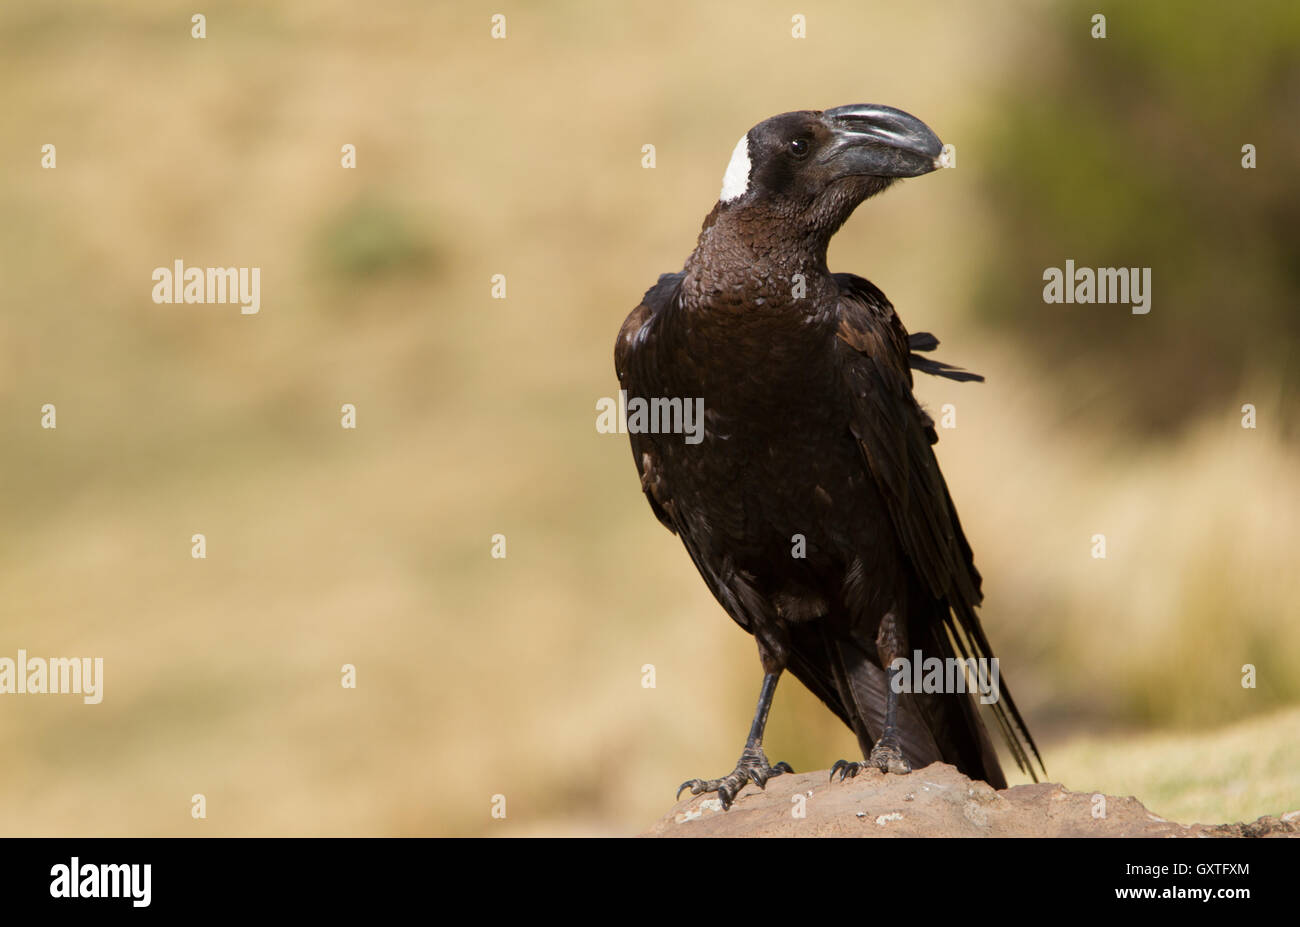 Cuervo de pico grueso (Corvus crassirostris) posado sobre una roca Foto de stock